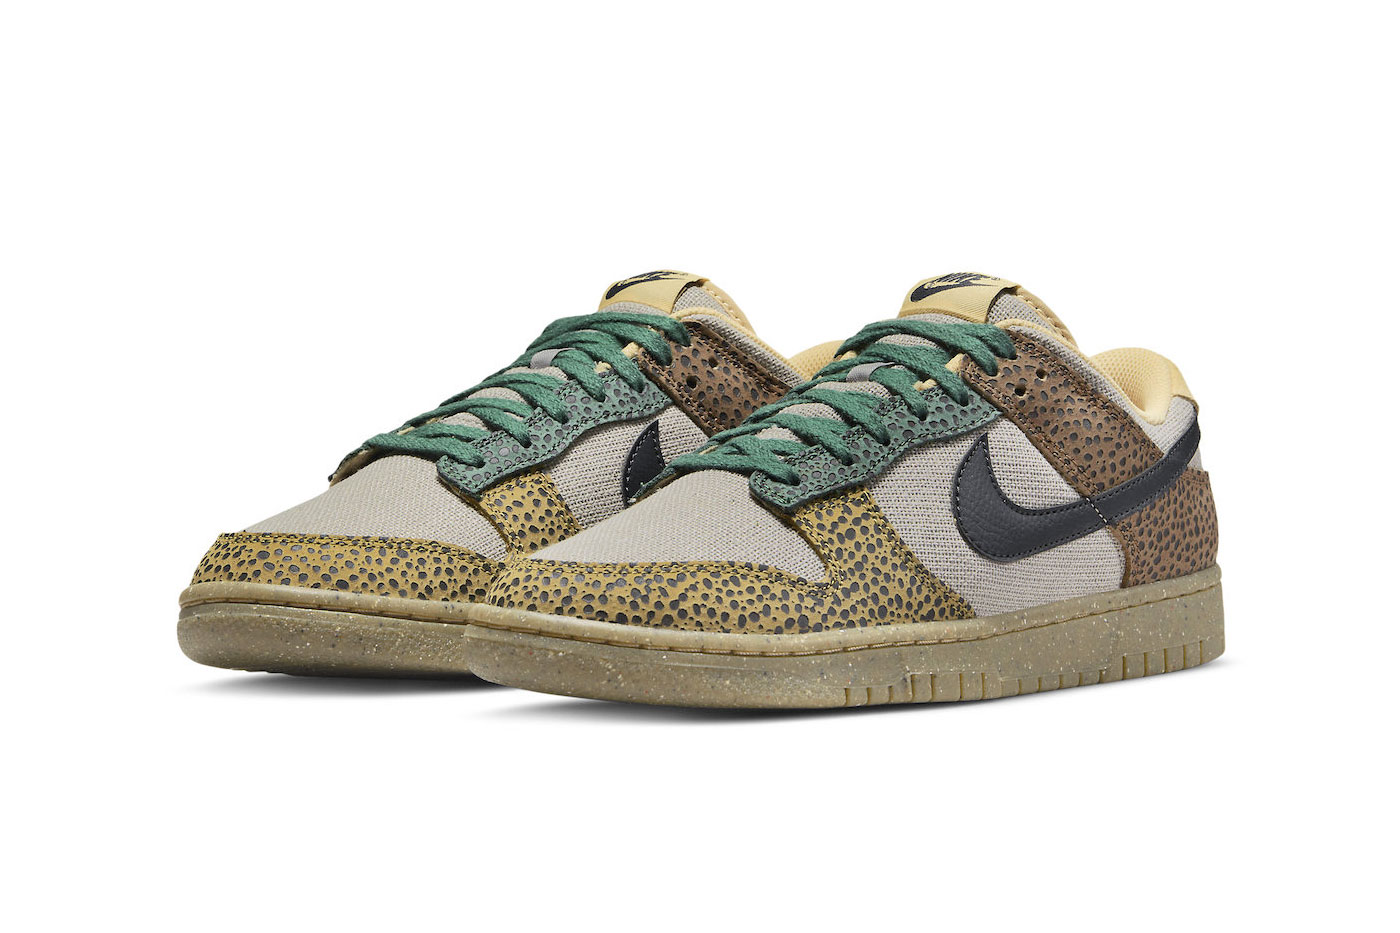 Nike Dunk Low "Safari" กลับมาอีกครั้งพร้อมลายเสือชีตาห์ที่ดูเข้มขึ้นกว่าเดิม